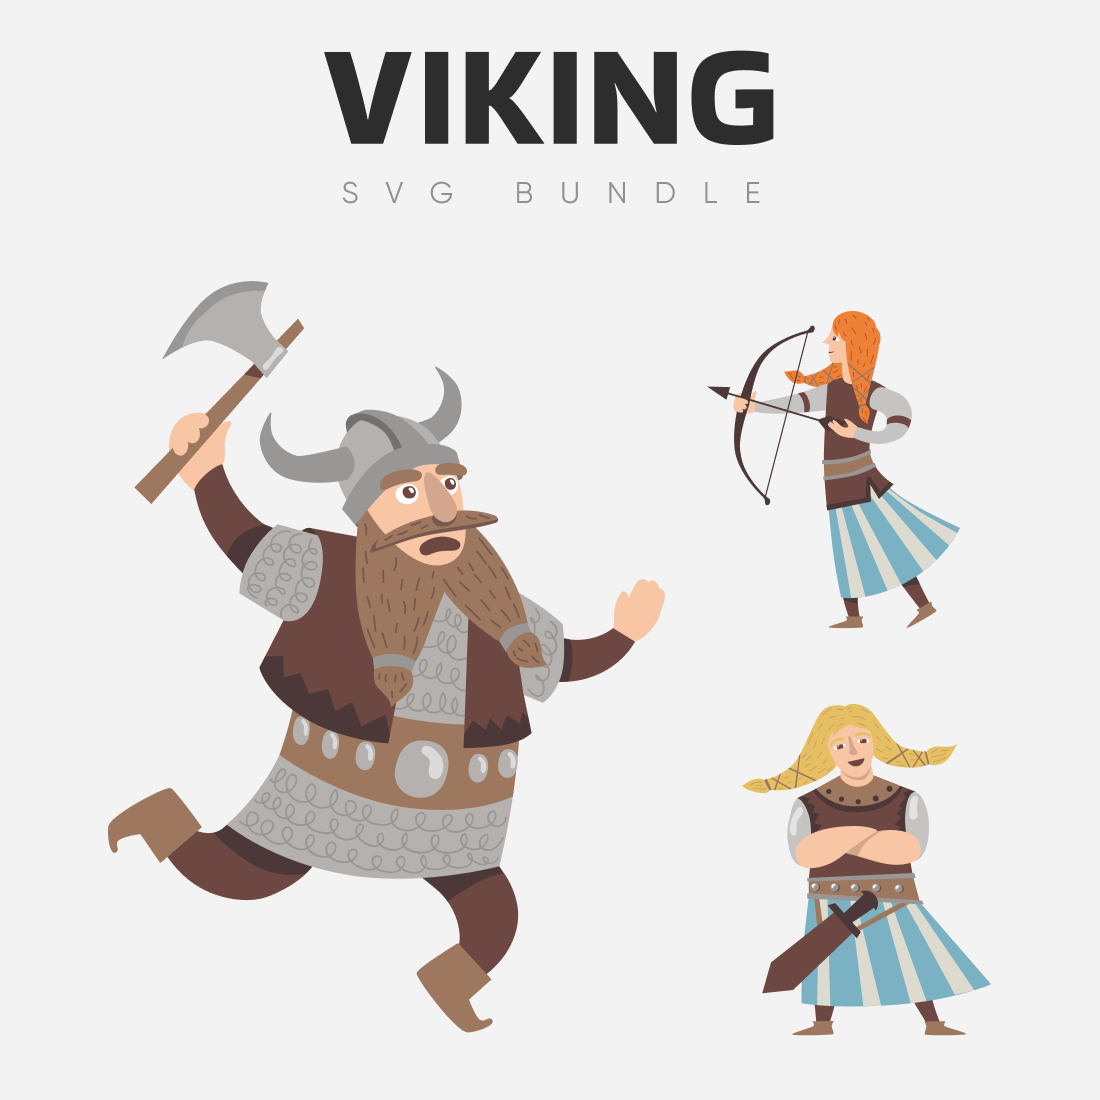 Warriors viking SVG bundle.